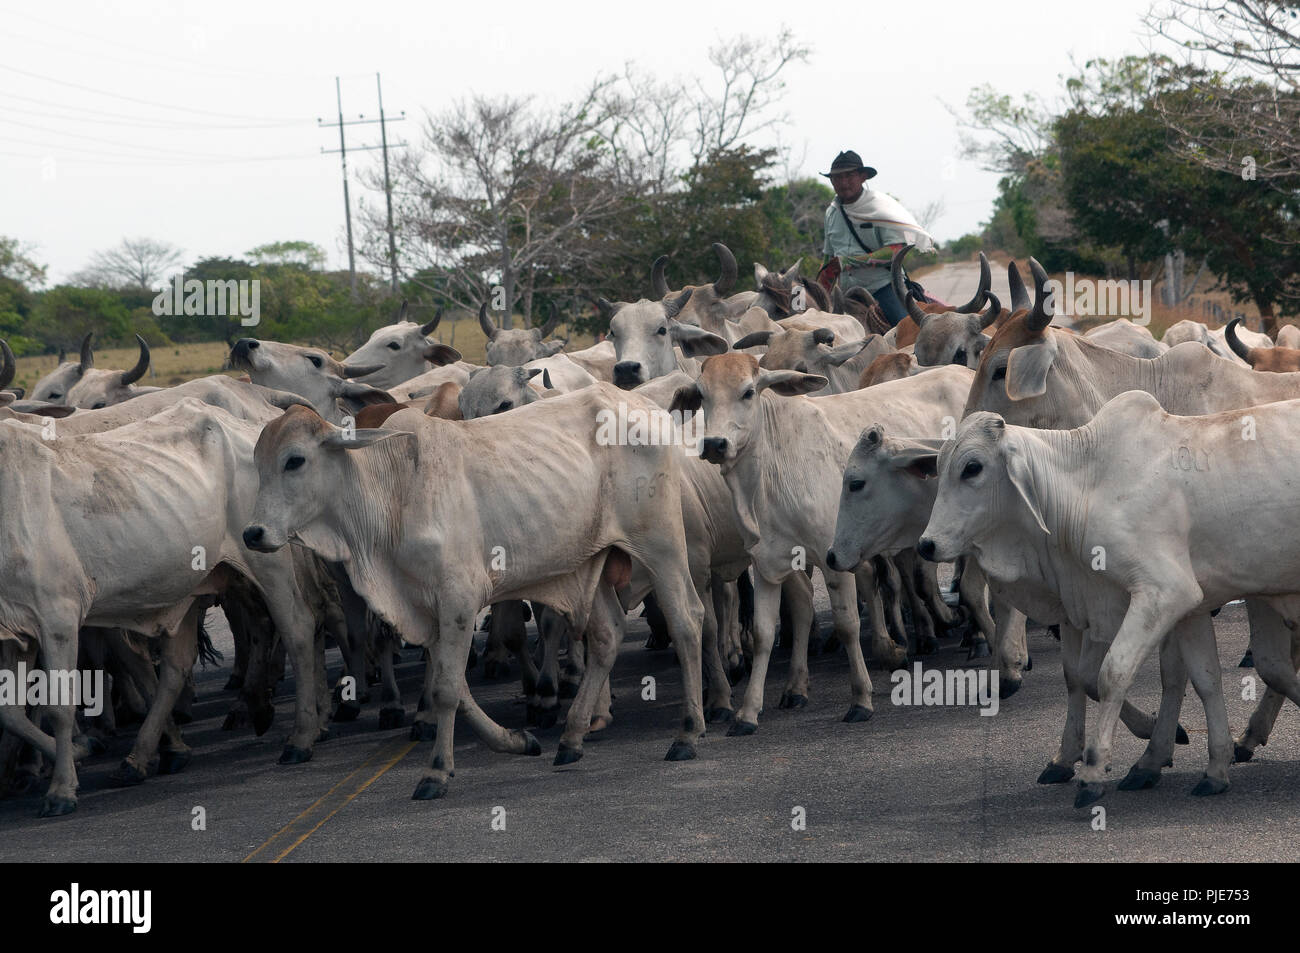 Columbian  cowboys herding cattle Stock Photo